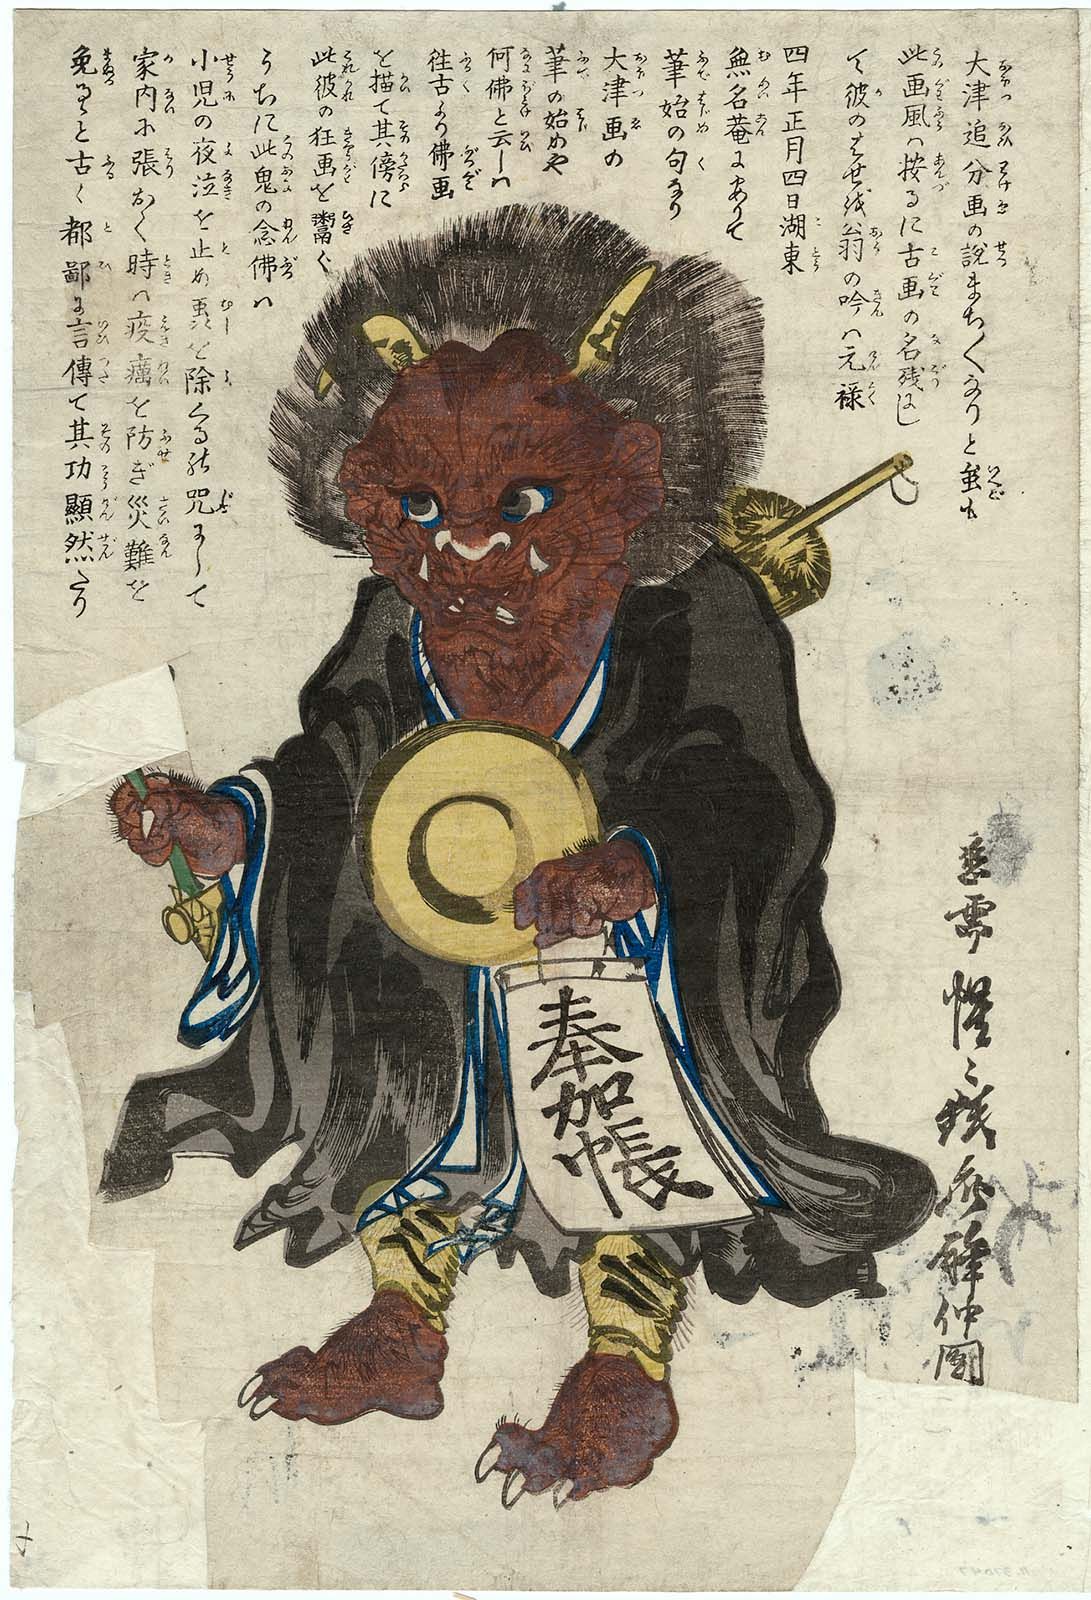 Ôtsu-e Figure: Demon Converted to Buddhism (Oni no nenbutsu) by Kawanabe Kyōsai - 1860s - 35.8 x 24.3 cm Museum of Fine Arts Boston